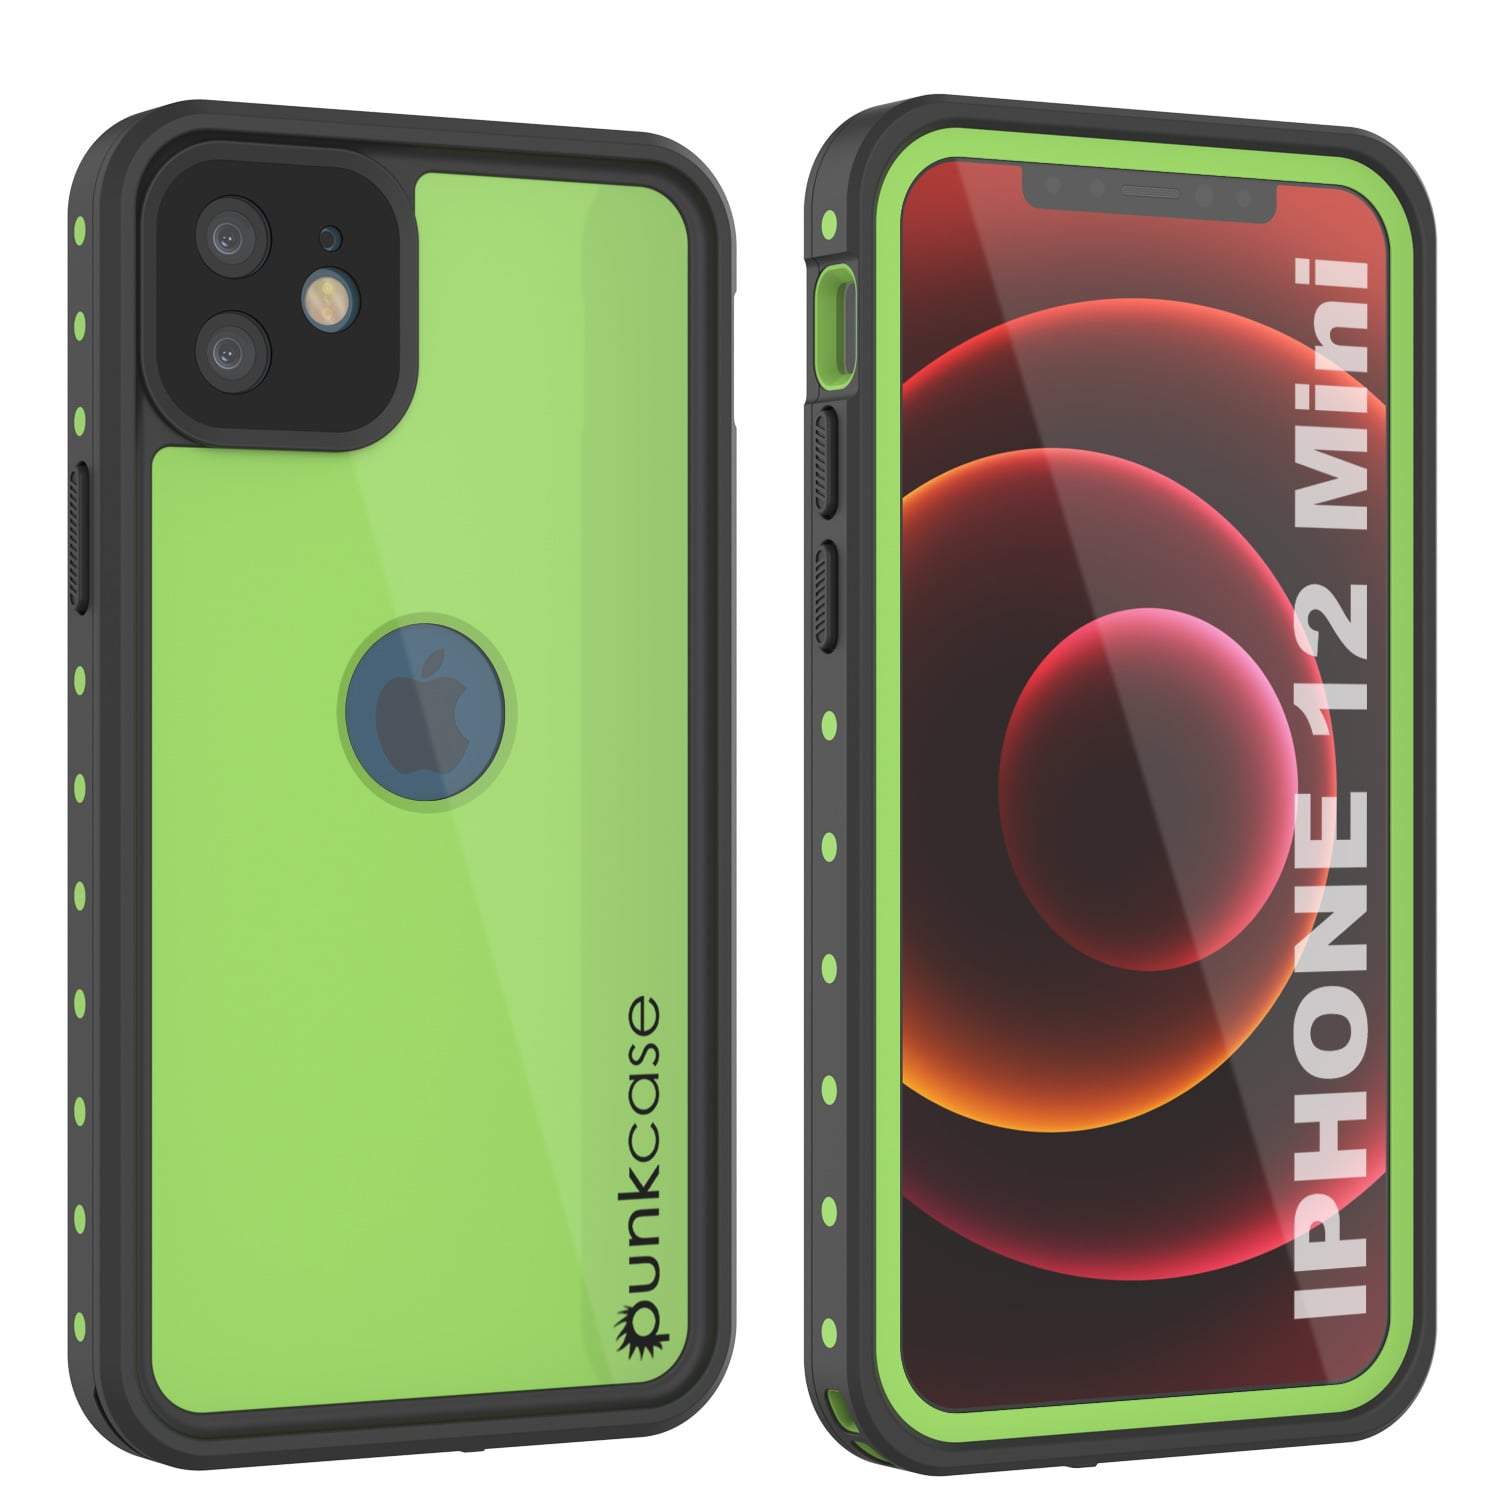 iPhone 12 Mini Waterproof IP68 Case, Punkcase [Light green] [StudStar Series] [Slim Fit] [Dirtproof] (Color in image: Light Green)